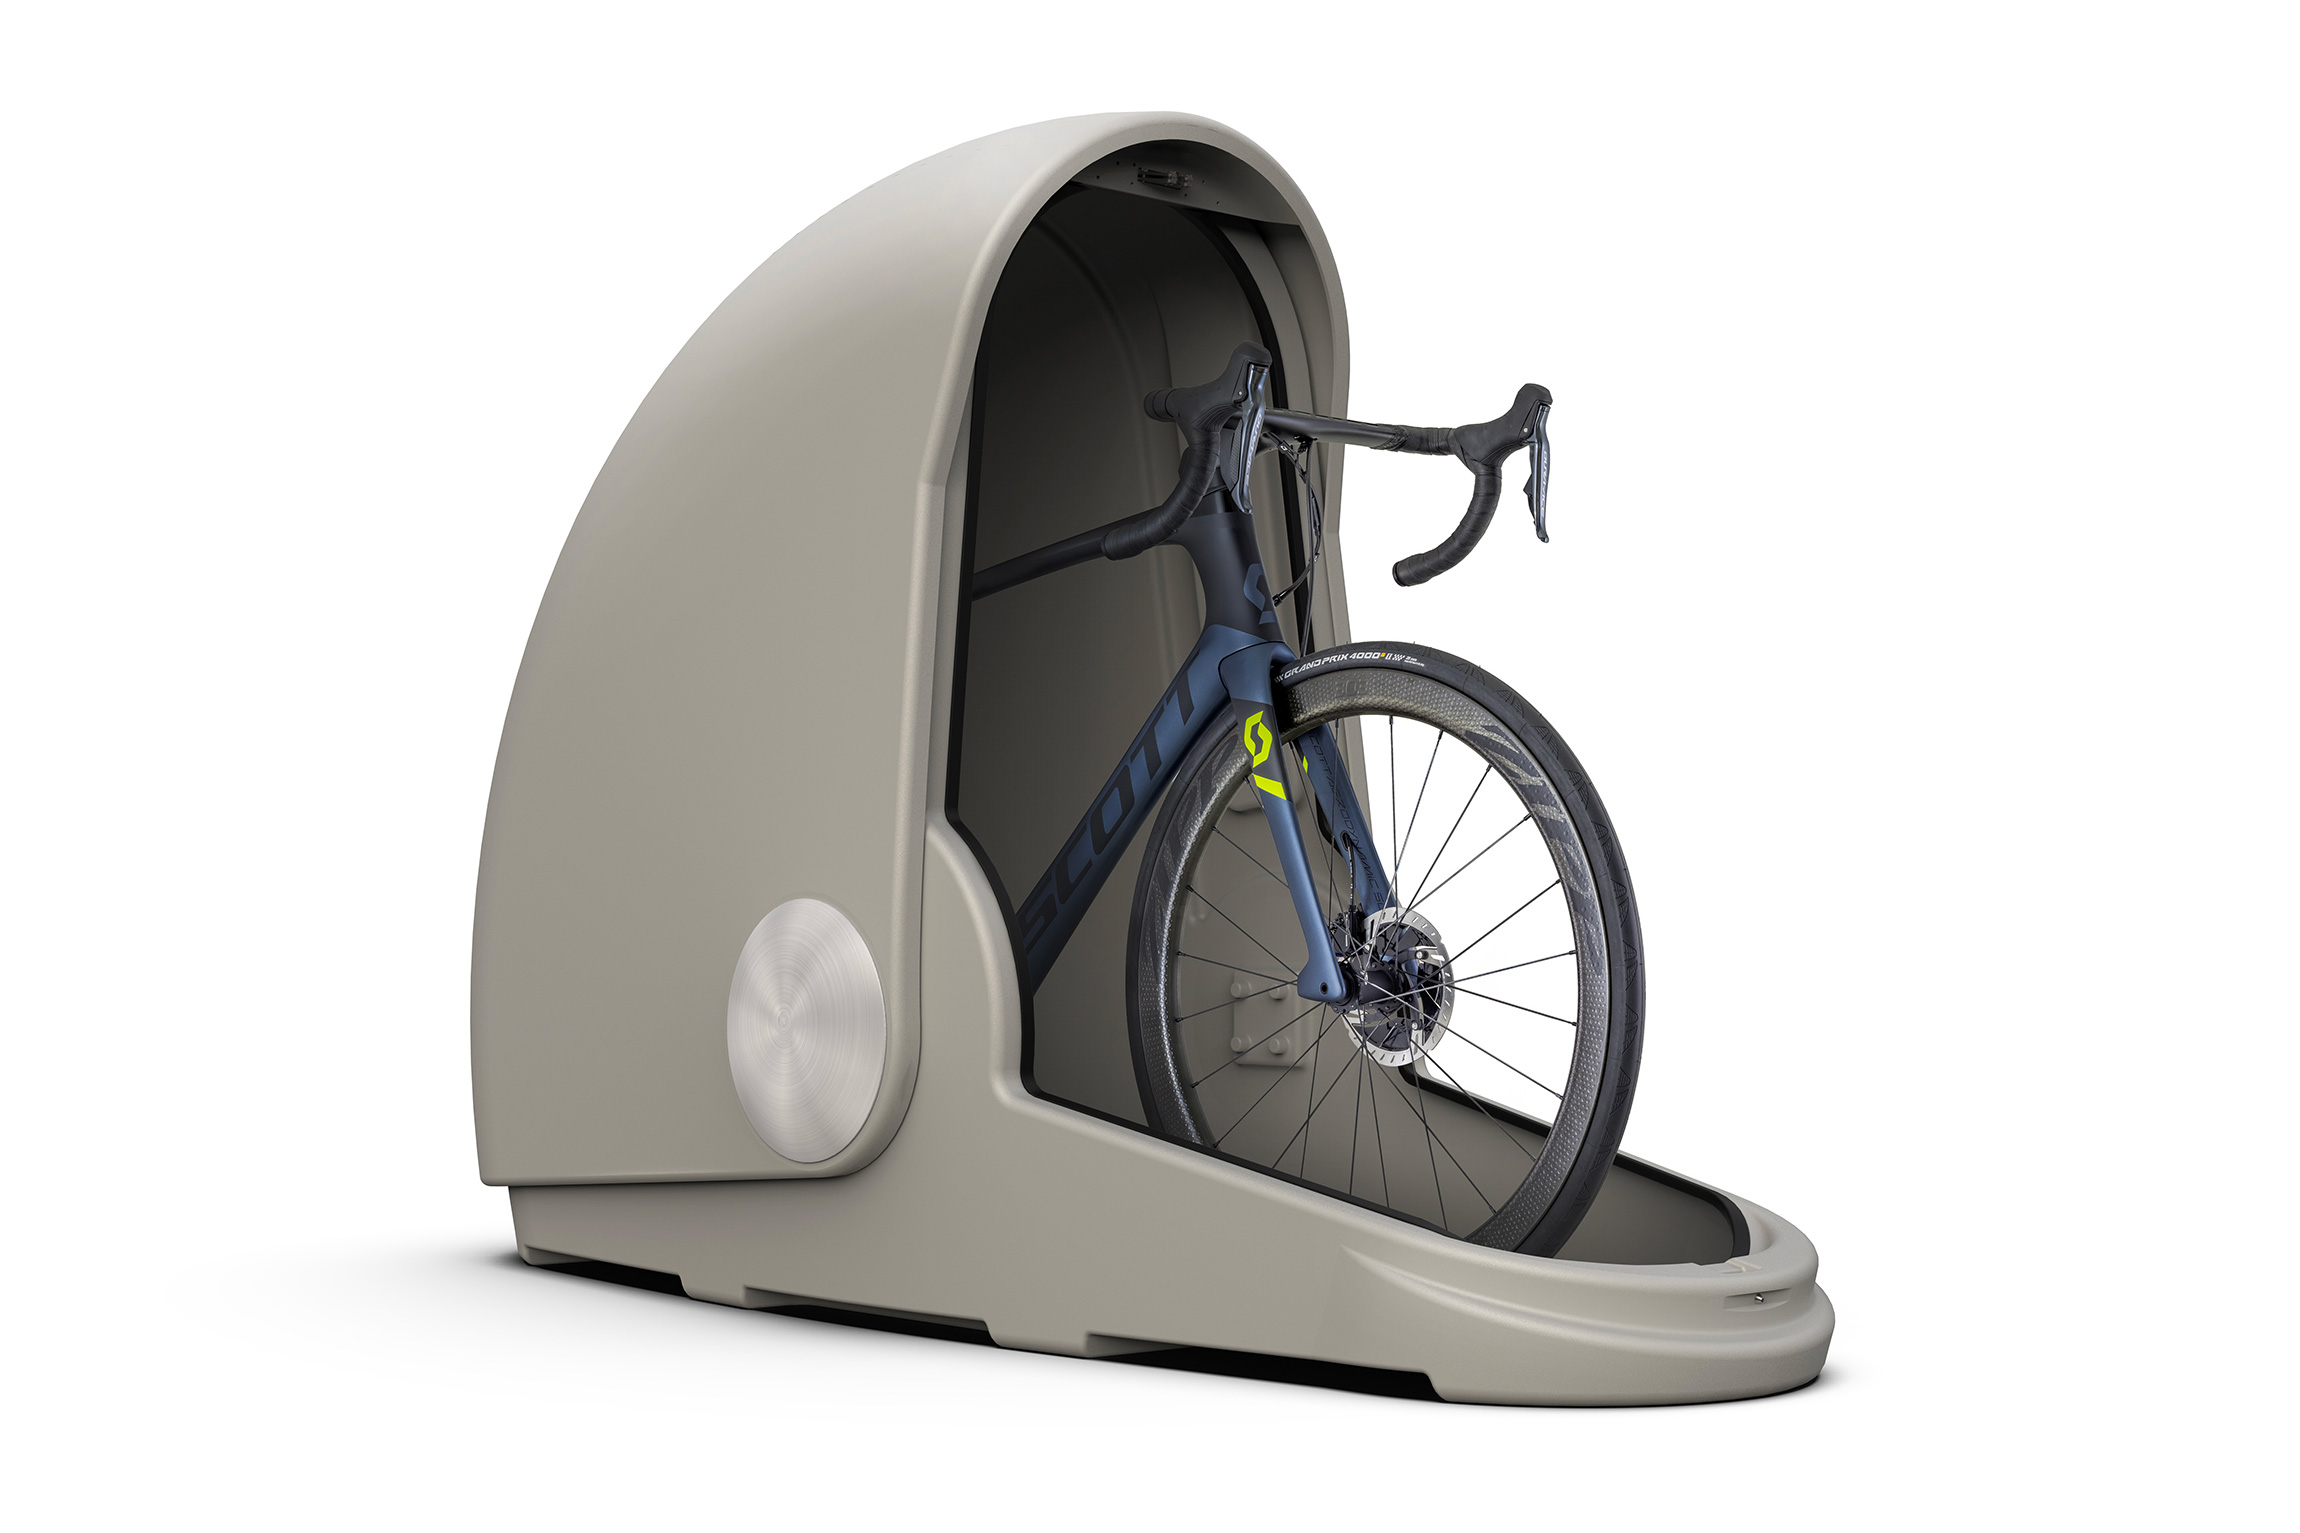 Alpen Bike Capsule Storage bicycle garage portable home price 